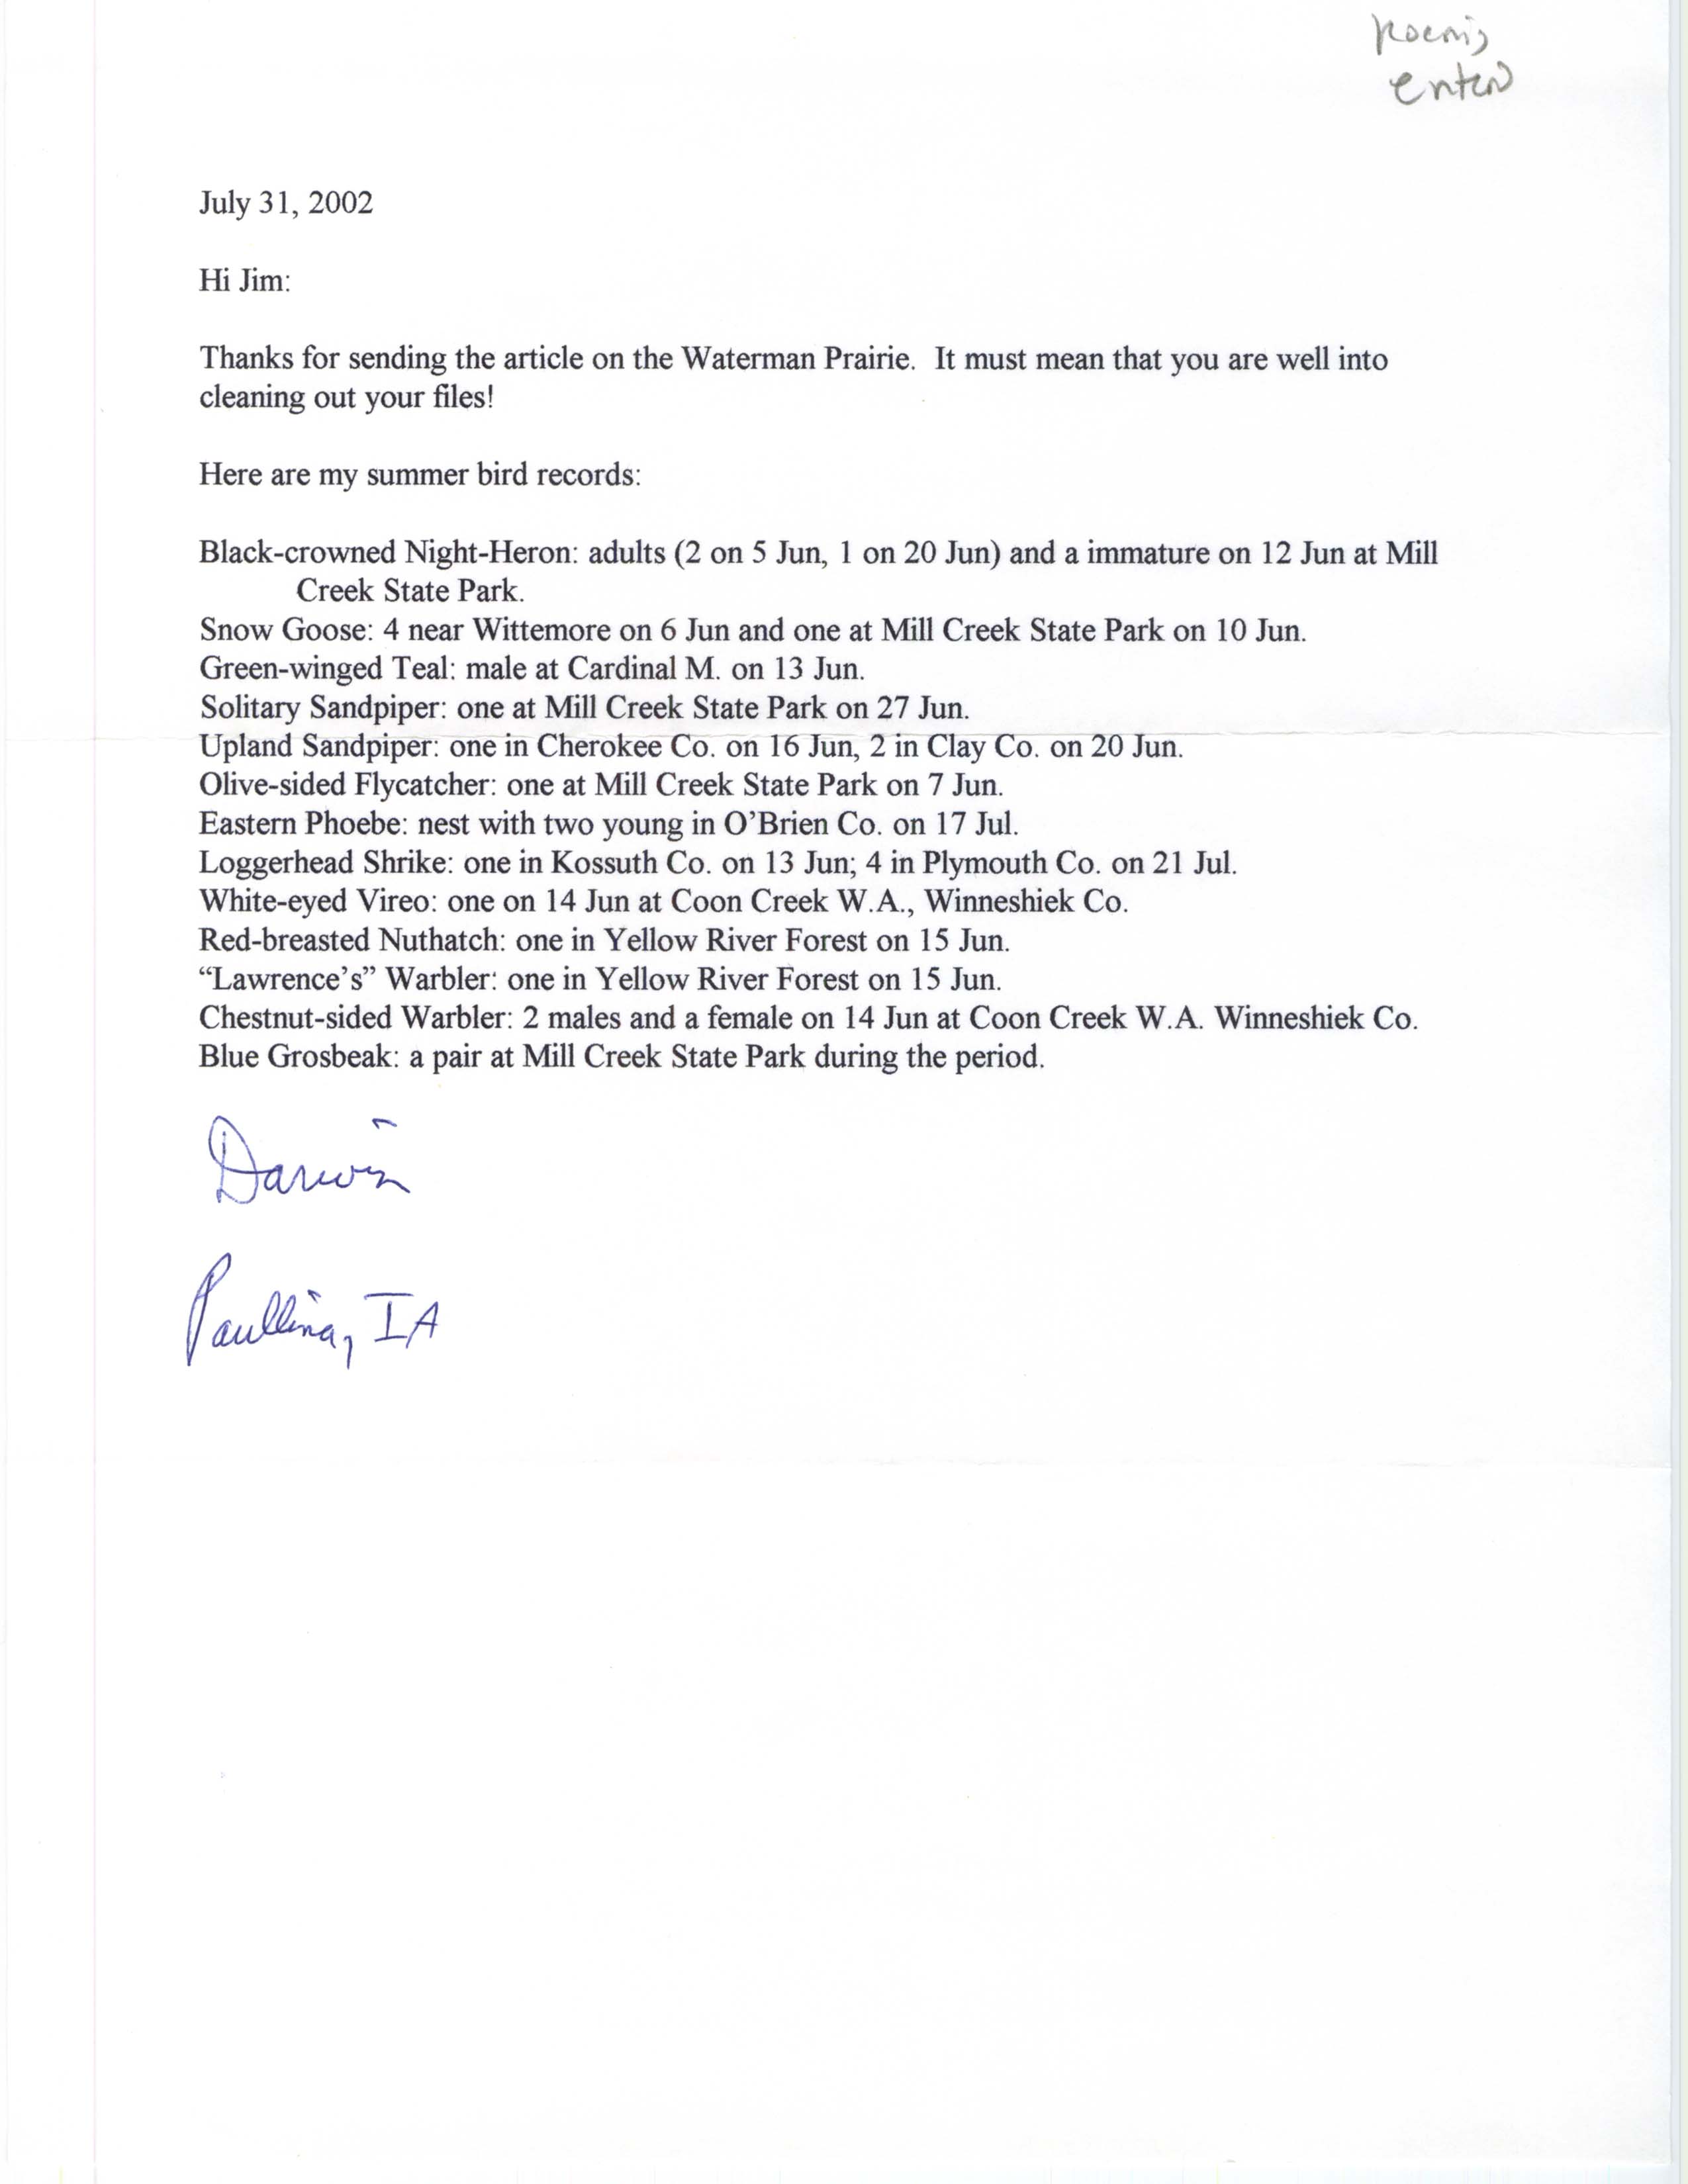 Darwin Koenig letter to James J. Dinsmore regarding summer bird sightings, July 31, 2002